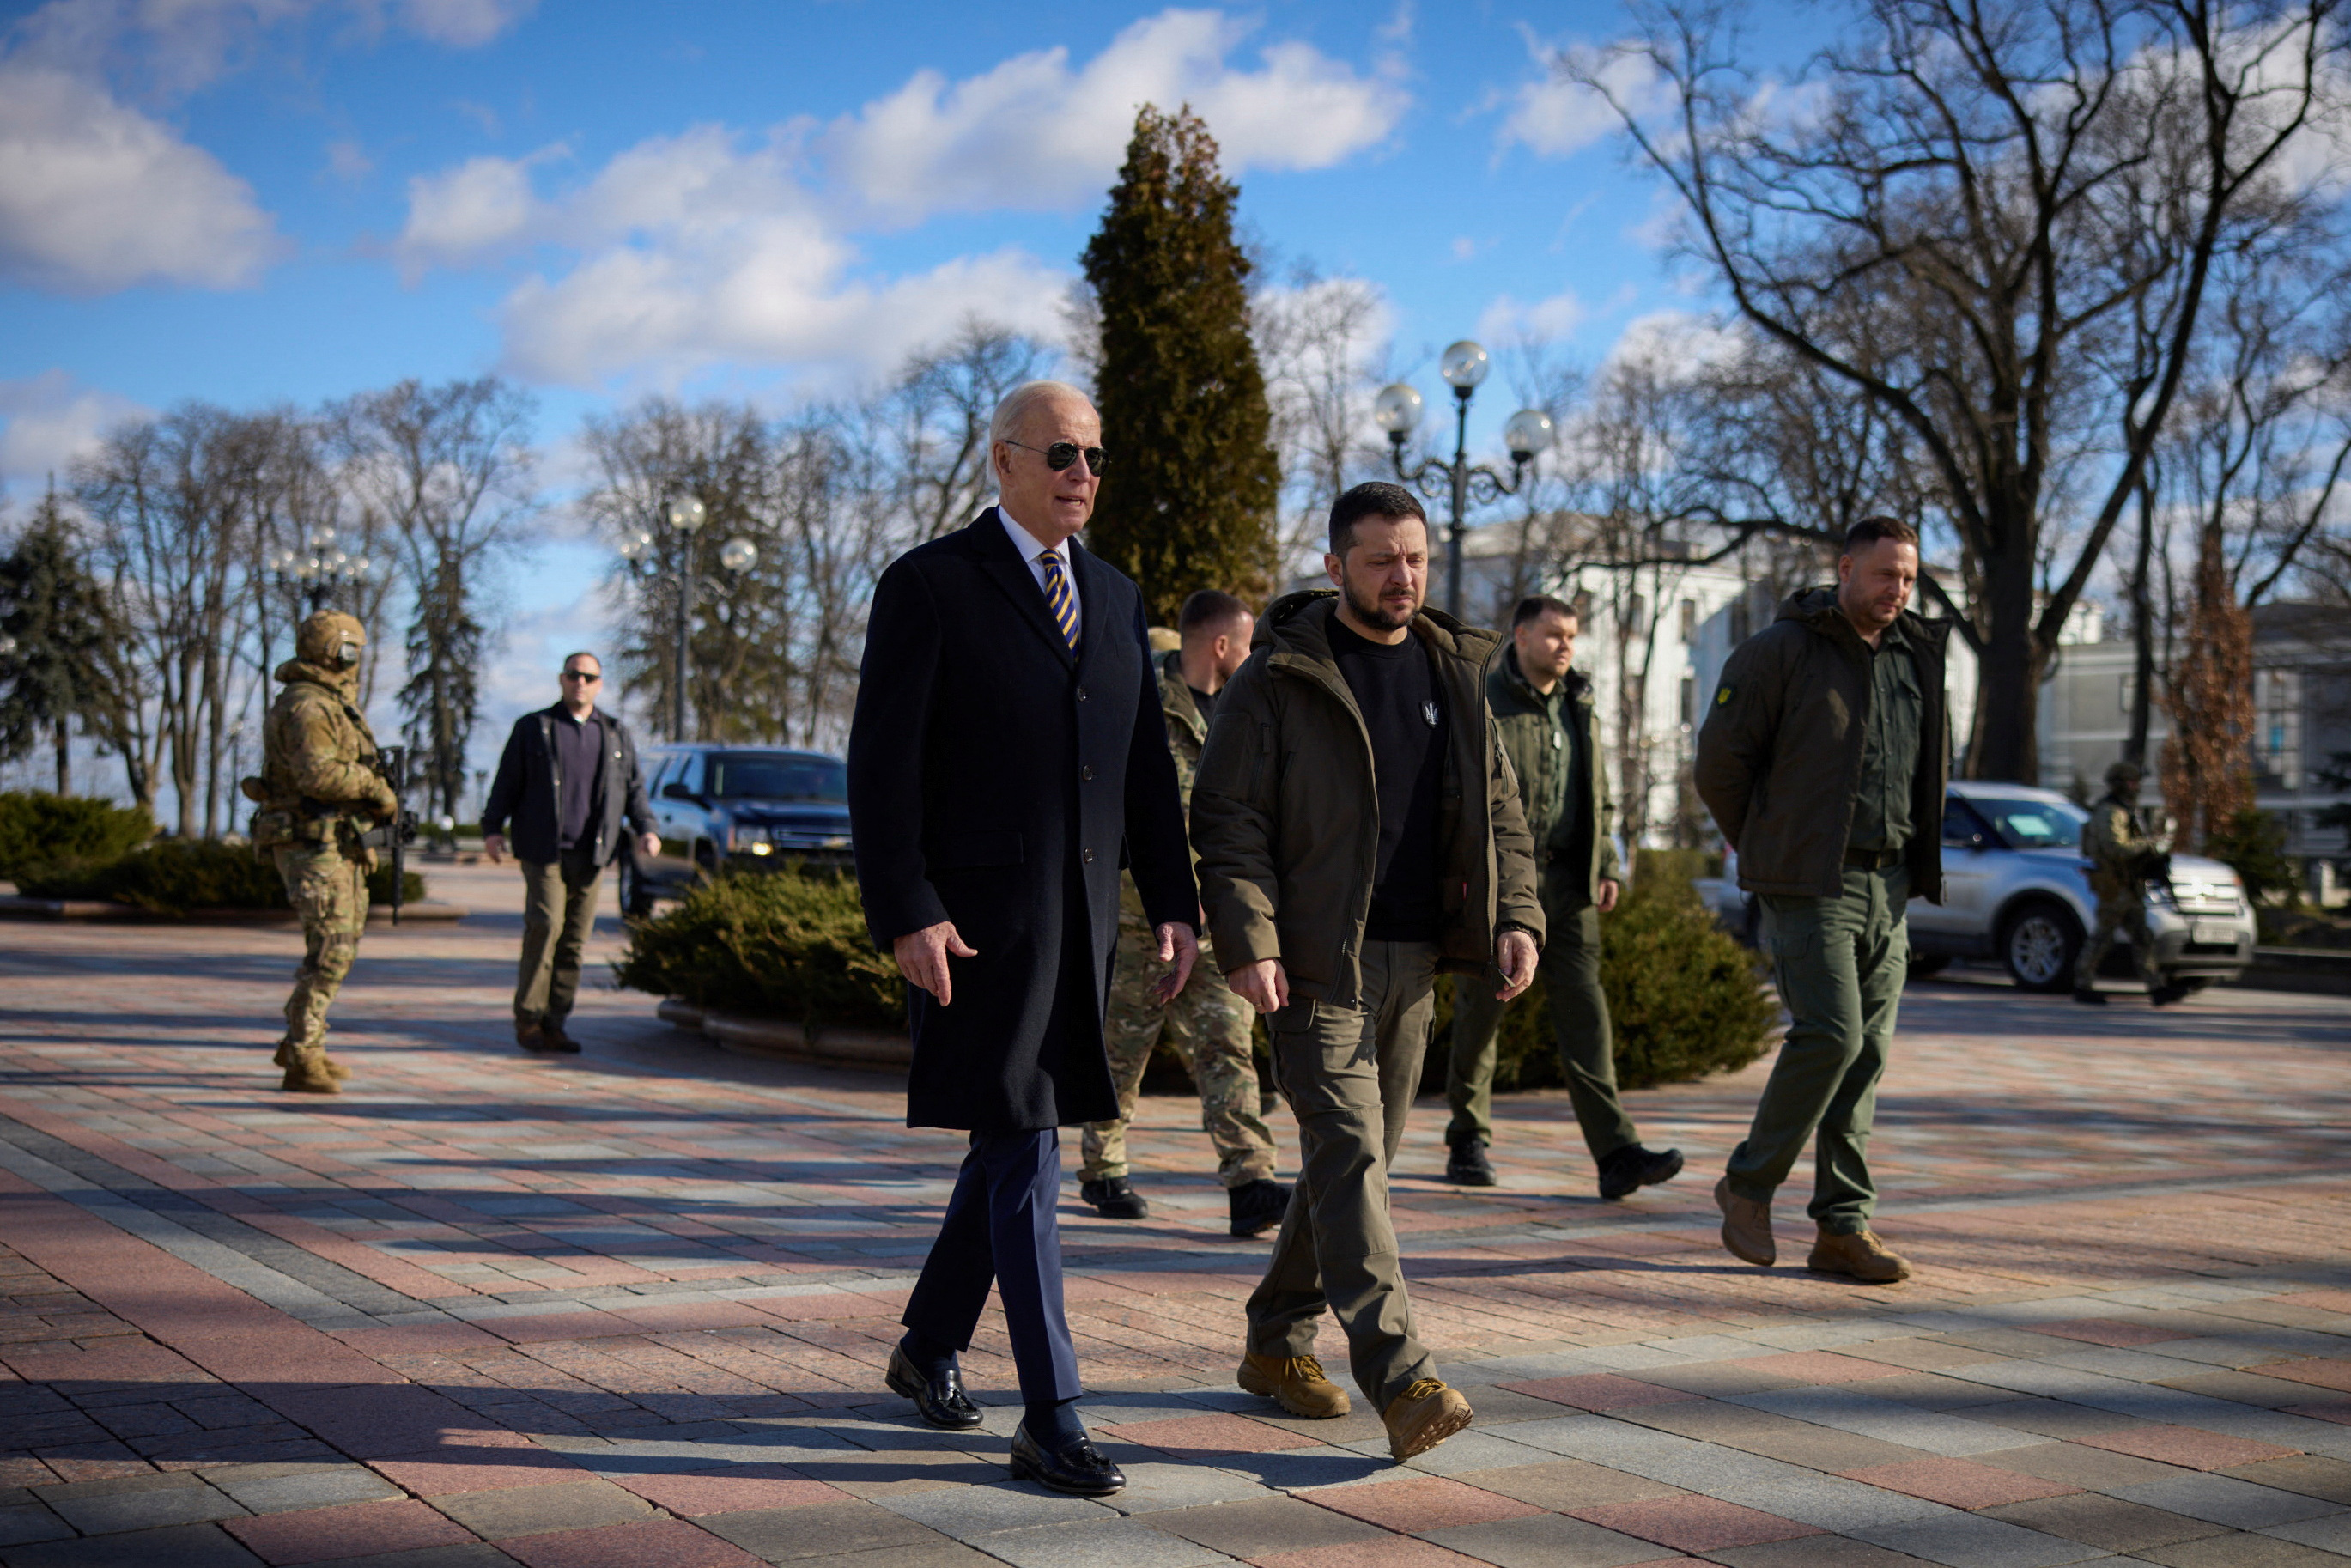 U.S. President Joe Biden walks with Ukrainian President Volodymyr Zelenskiy during an unannounced visit, in Kyiv, Ukraine, Monday, Feb. 20, 2023. Evan Vucci/Pool via REUTERS